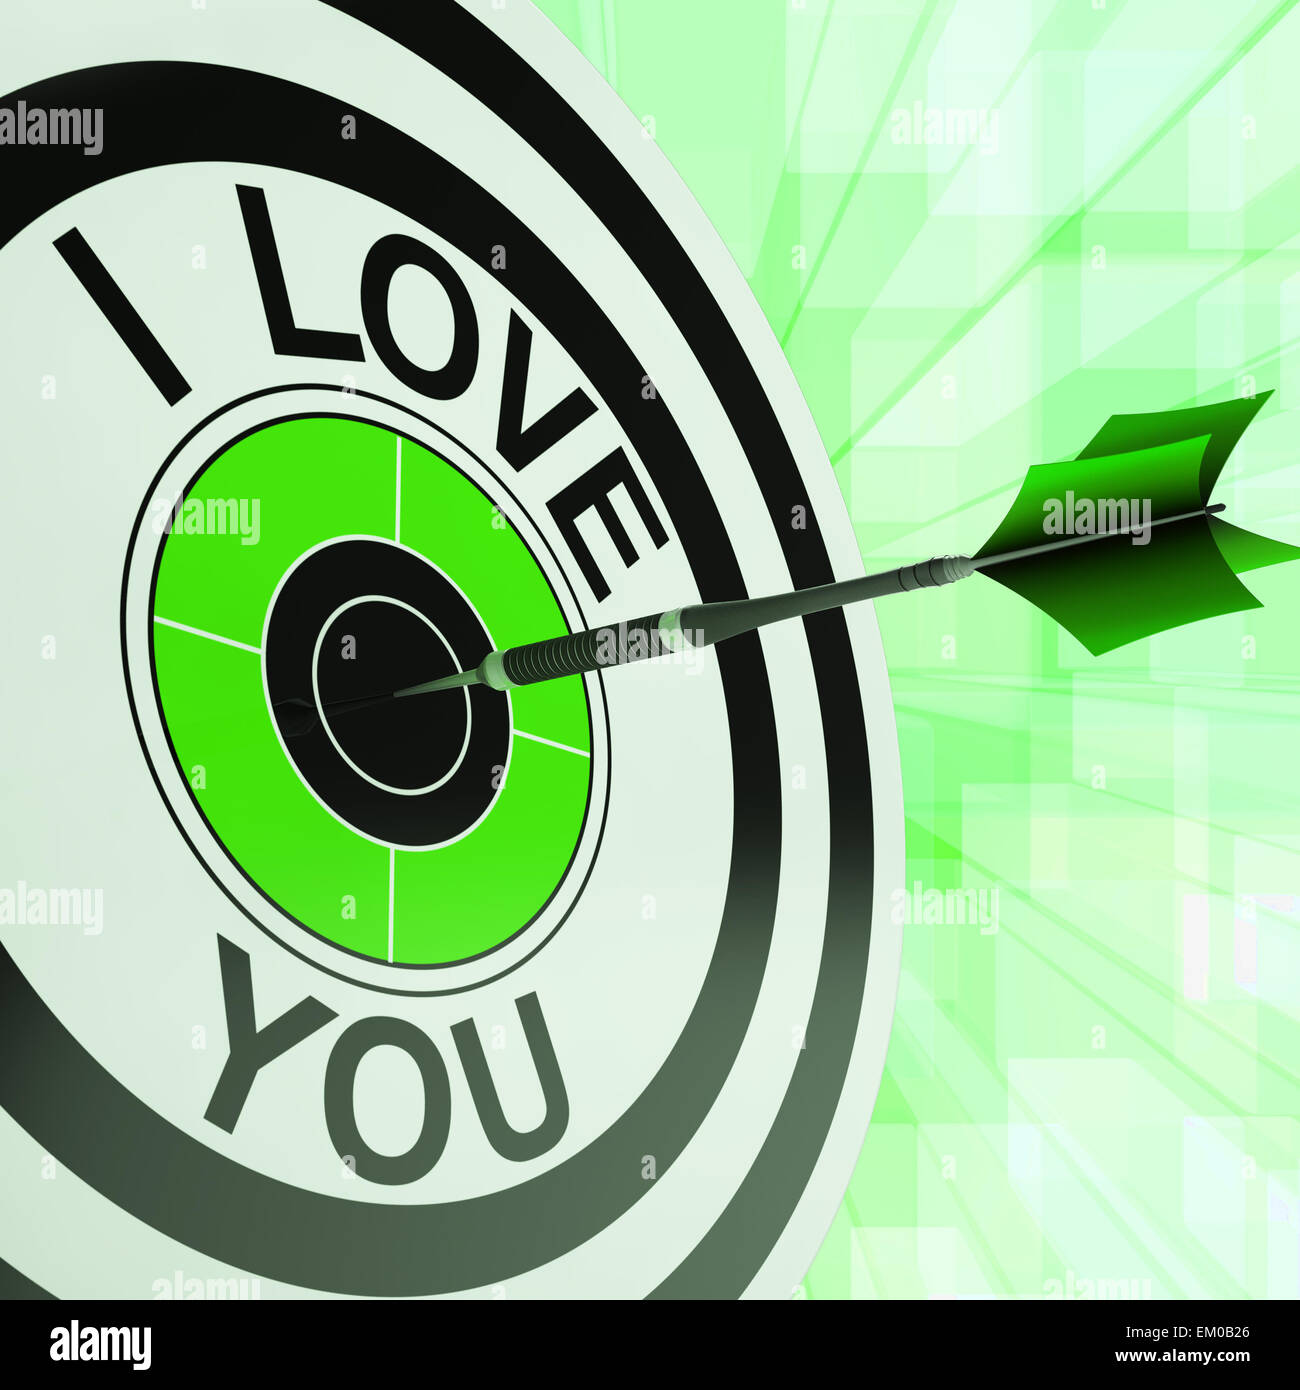 I Love You Me Target Shows Romance Stock Photo